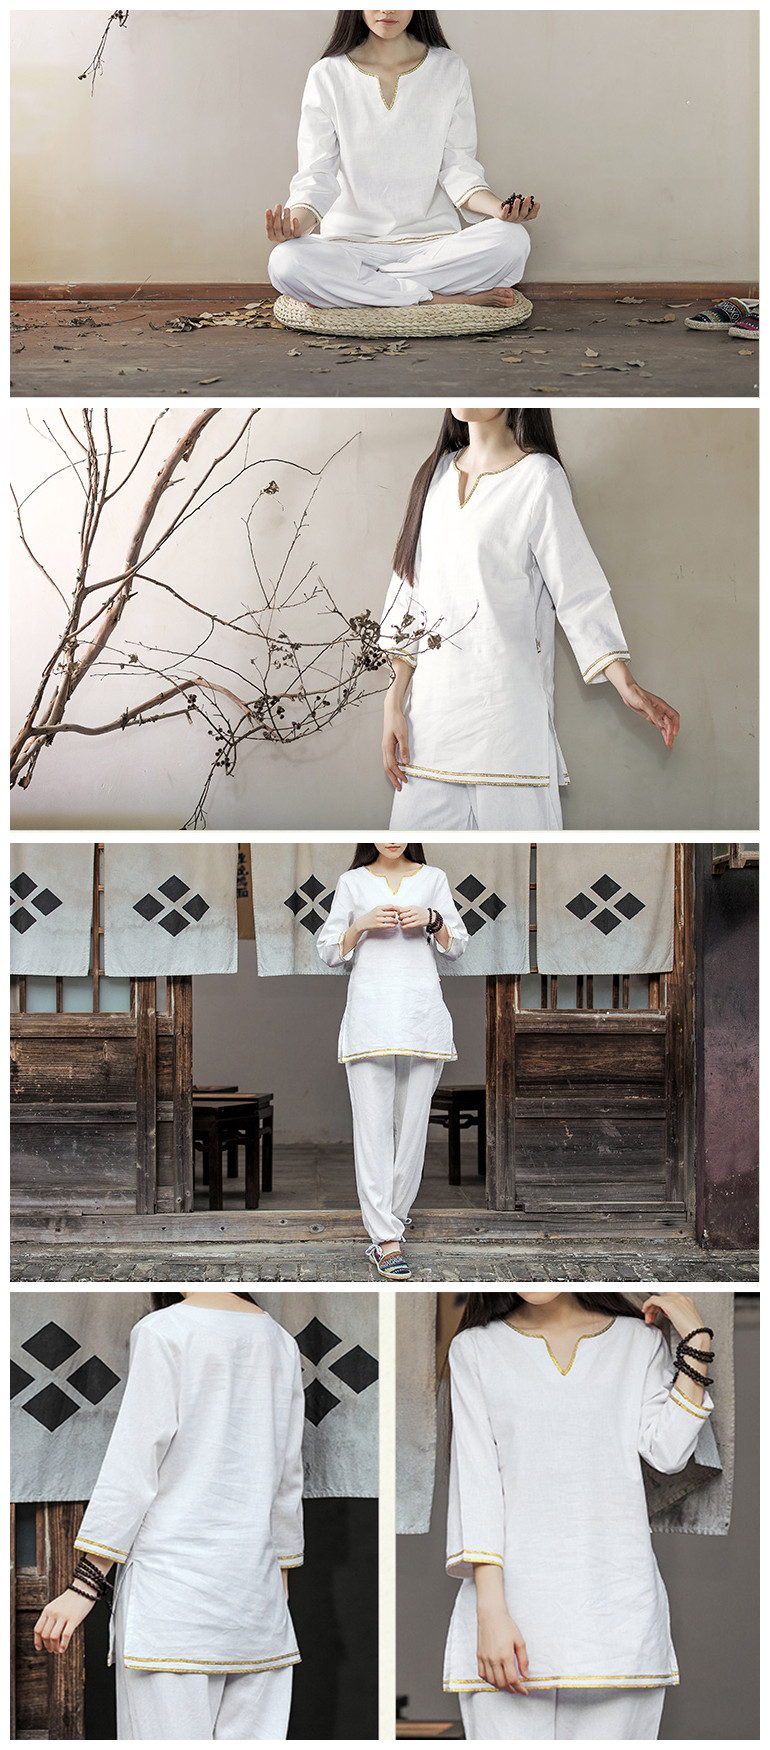 Women-Yoga-Suit-Cotton-Linen-Meditation-Clothing-Set-Lady-Dance-Fitness-Clothes-Sportswear-1078849-5